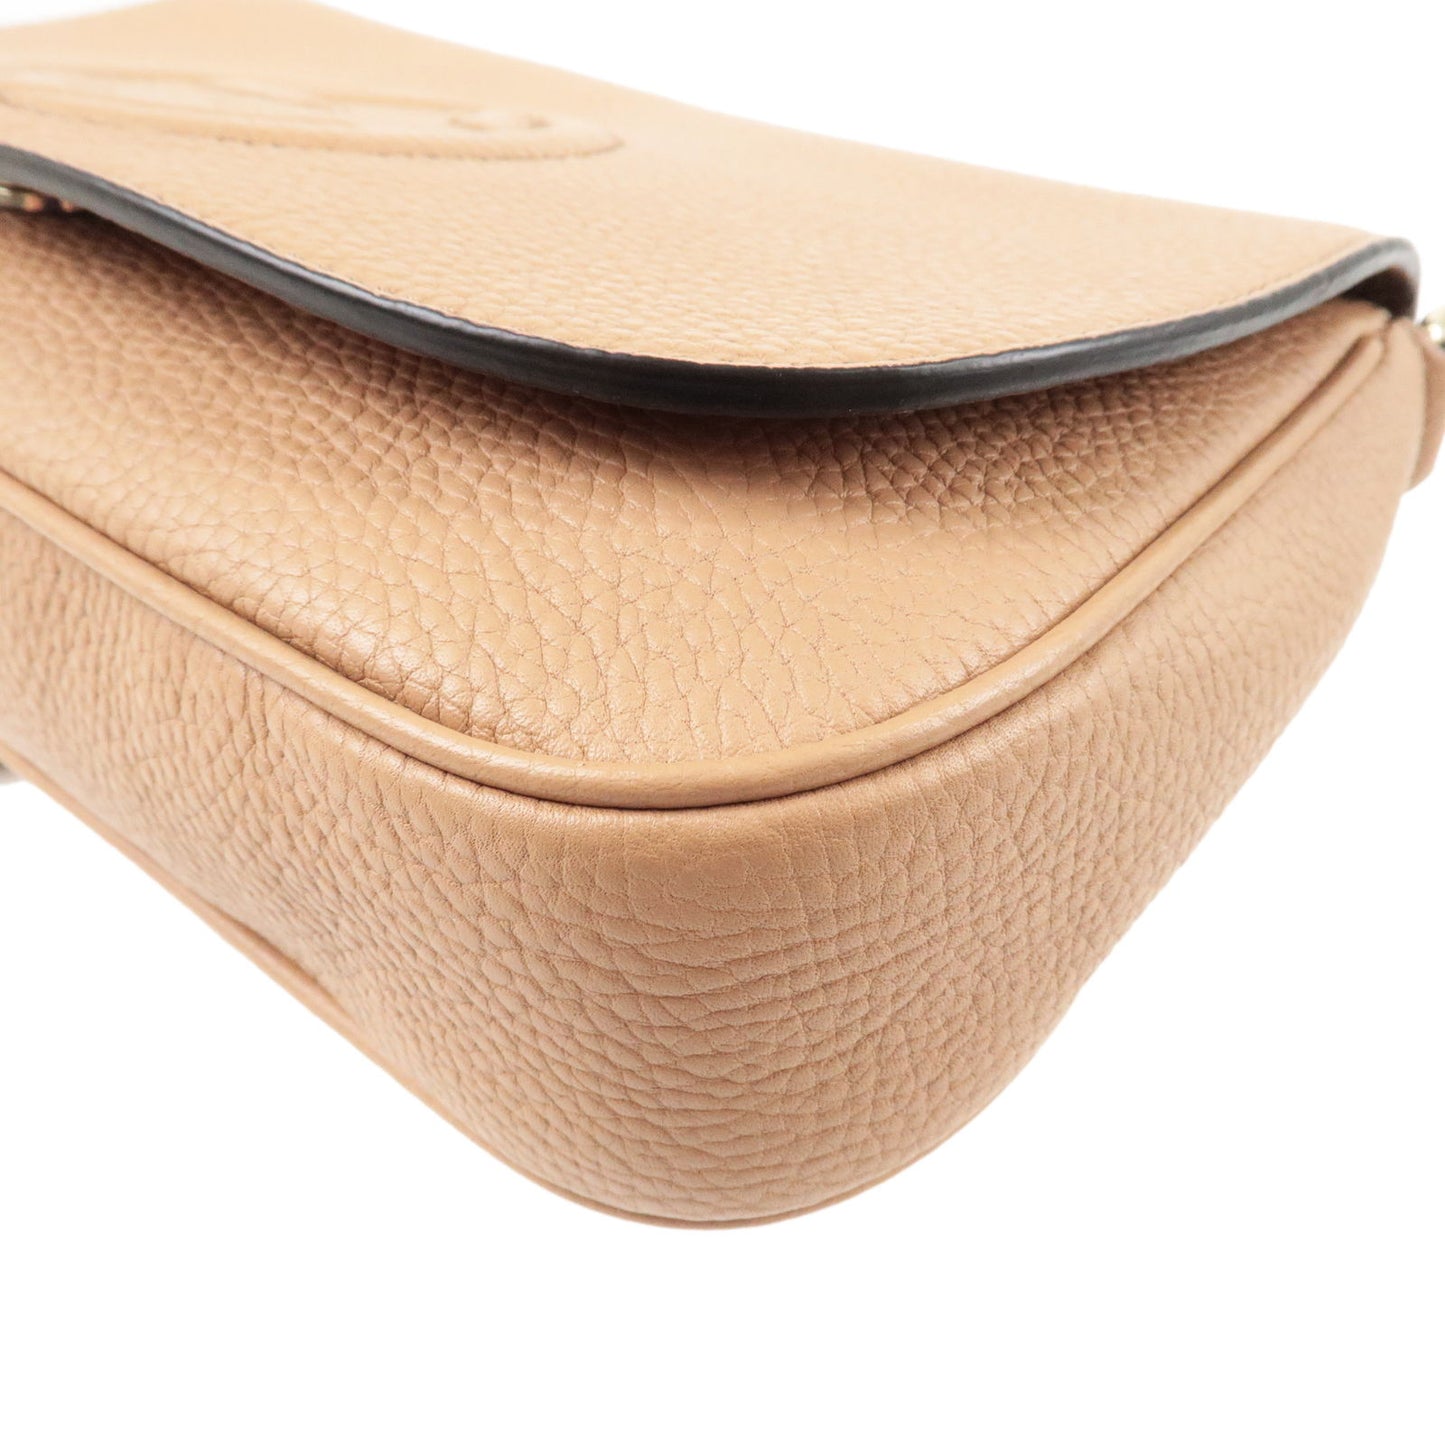 GUCCI SOHO Leather Chain Shoulder Bag Purse Beige 536224